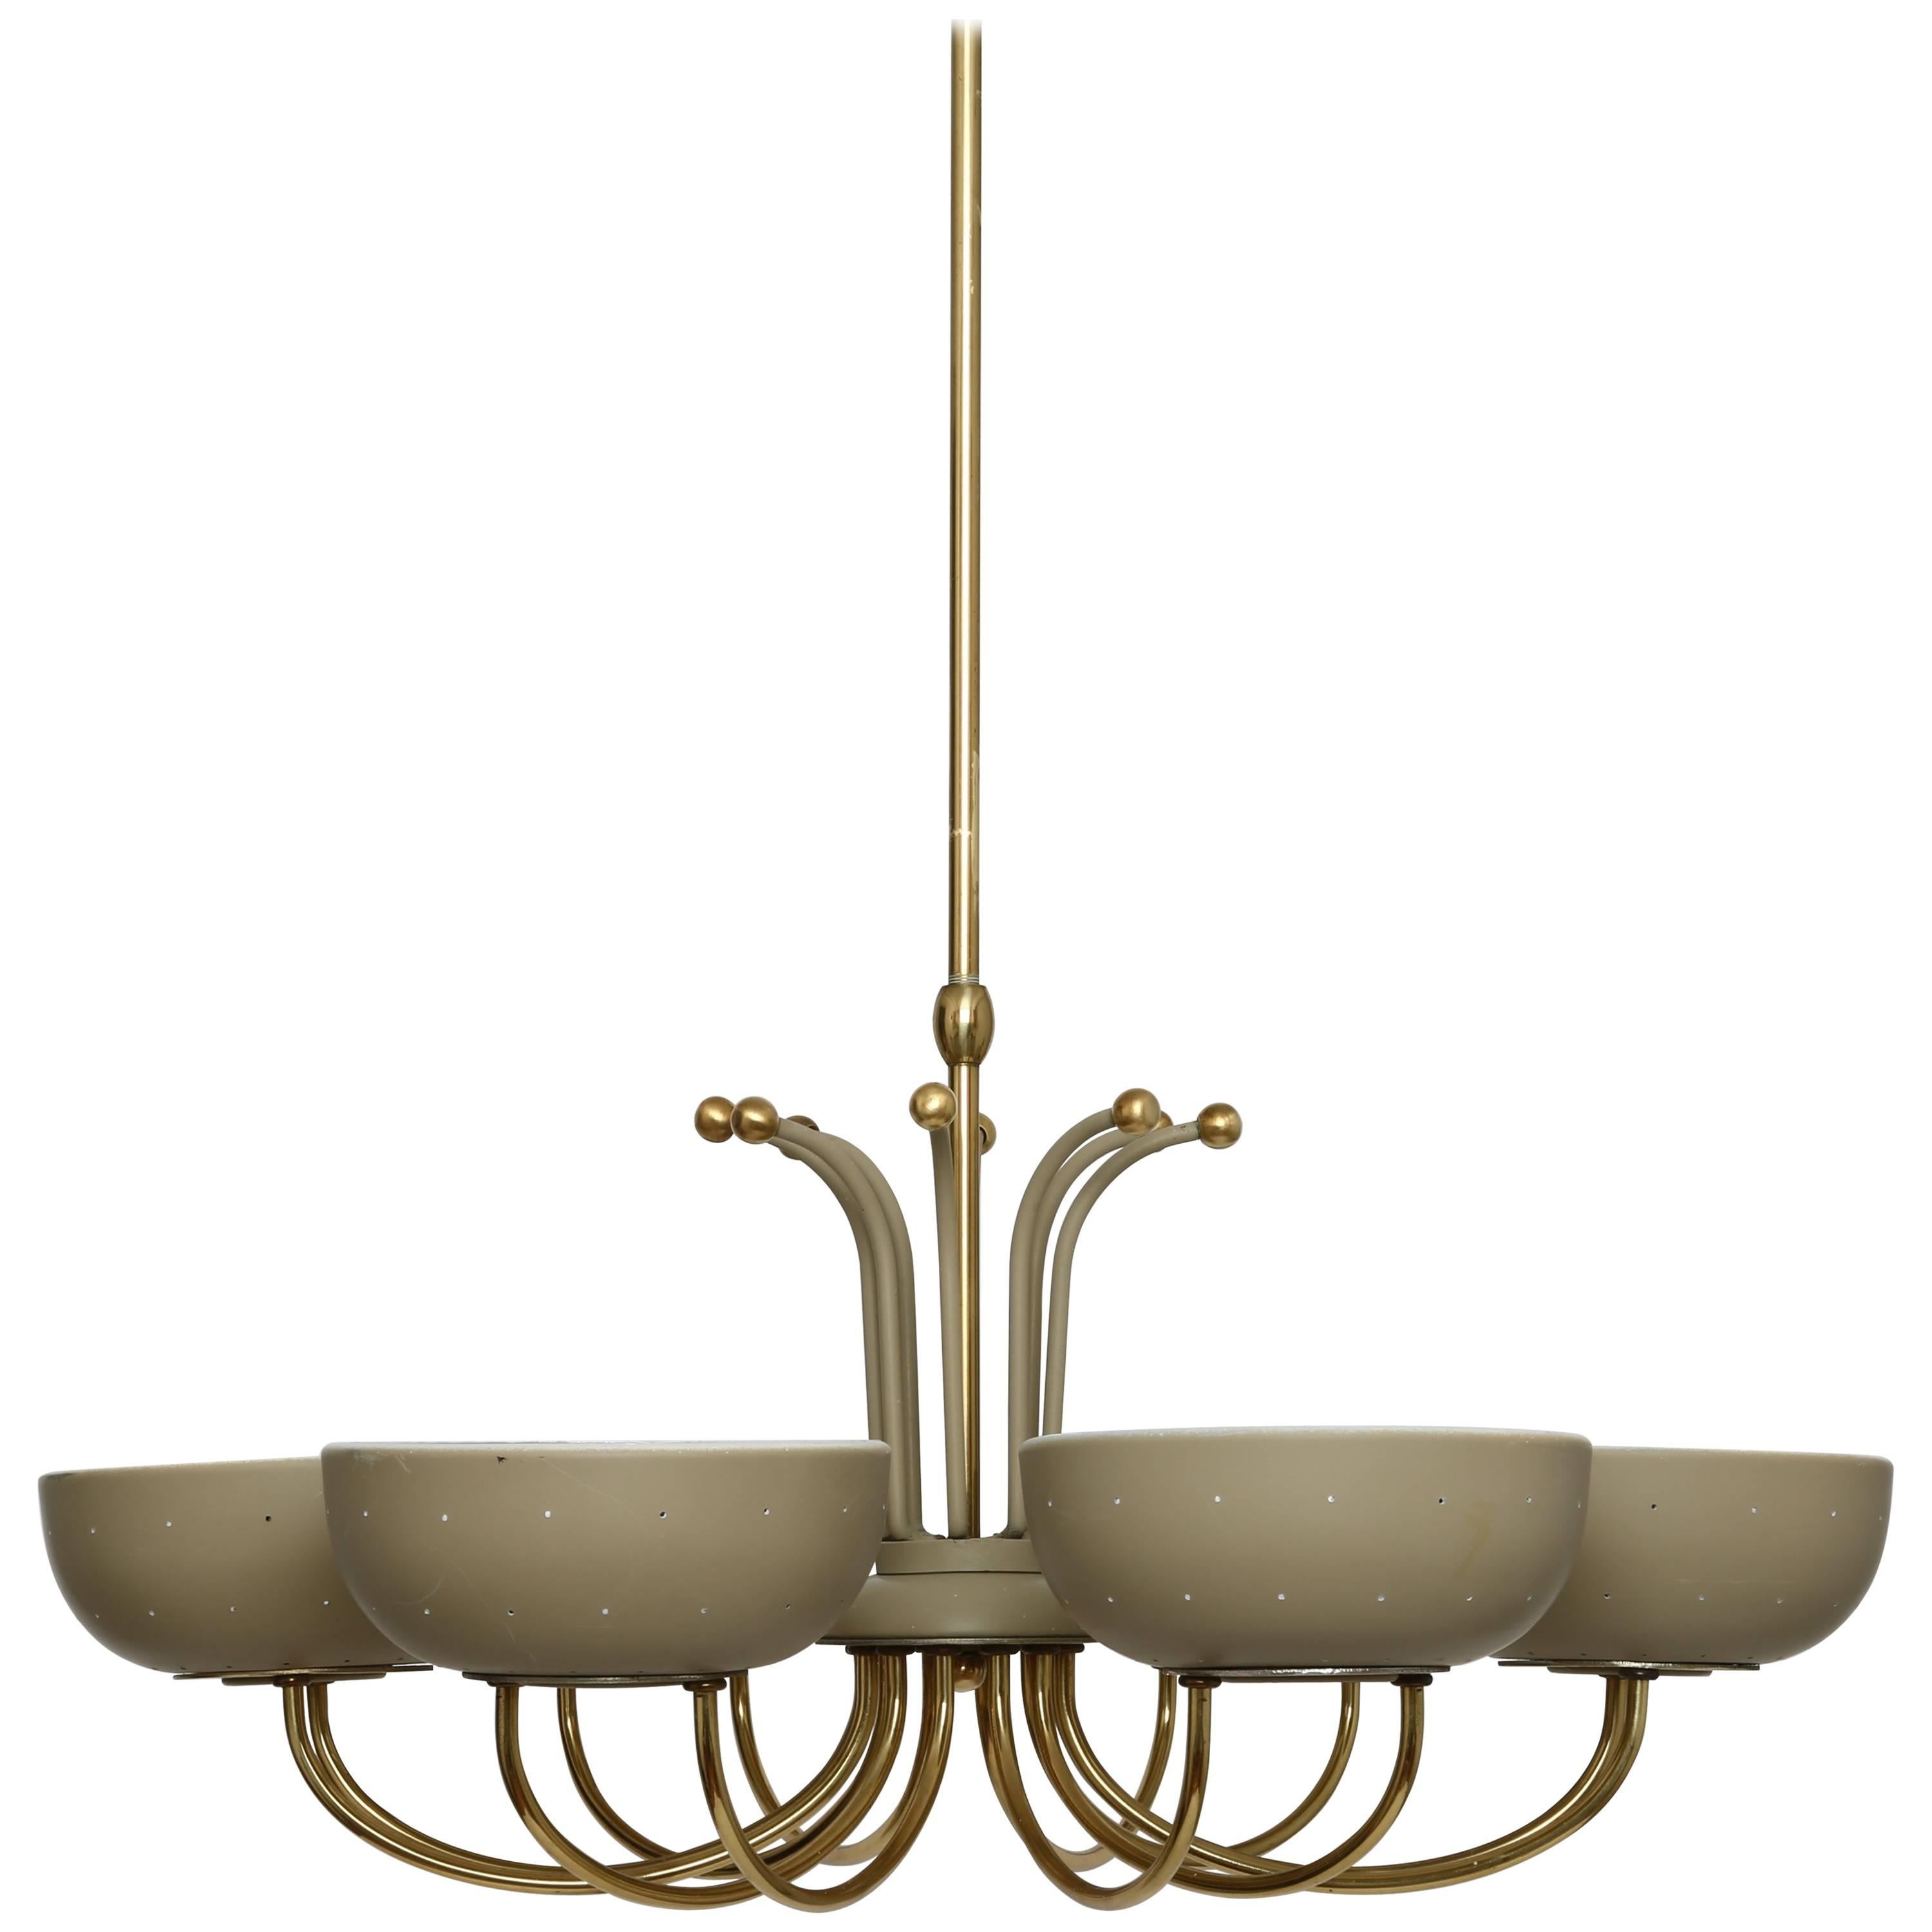 Elegant chandelier by Lightolier.
Six lights held by brass branches.

    